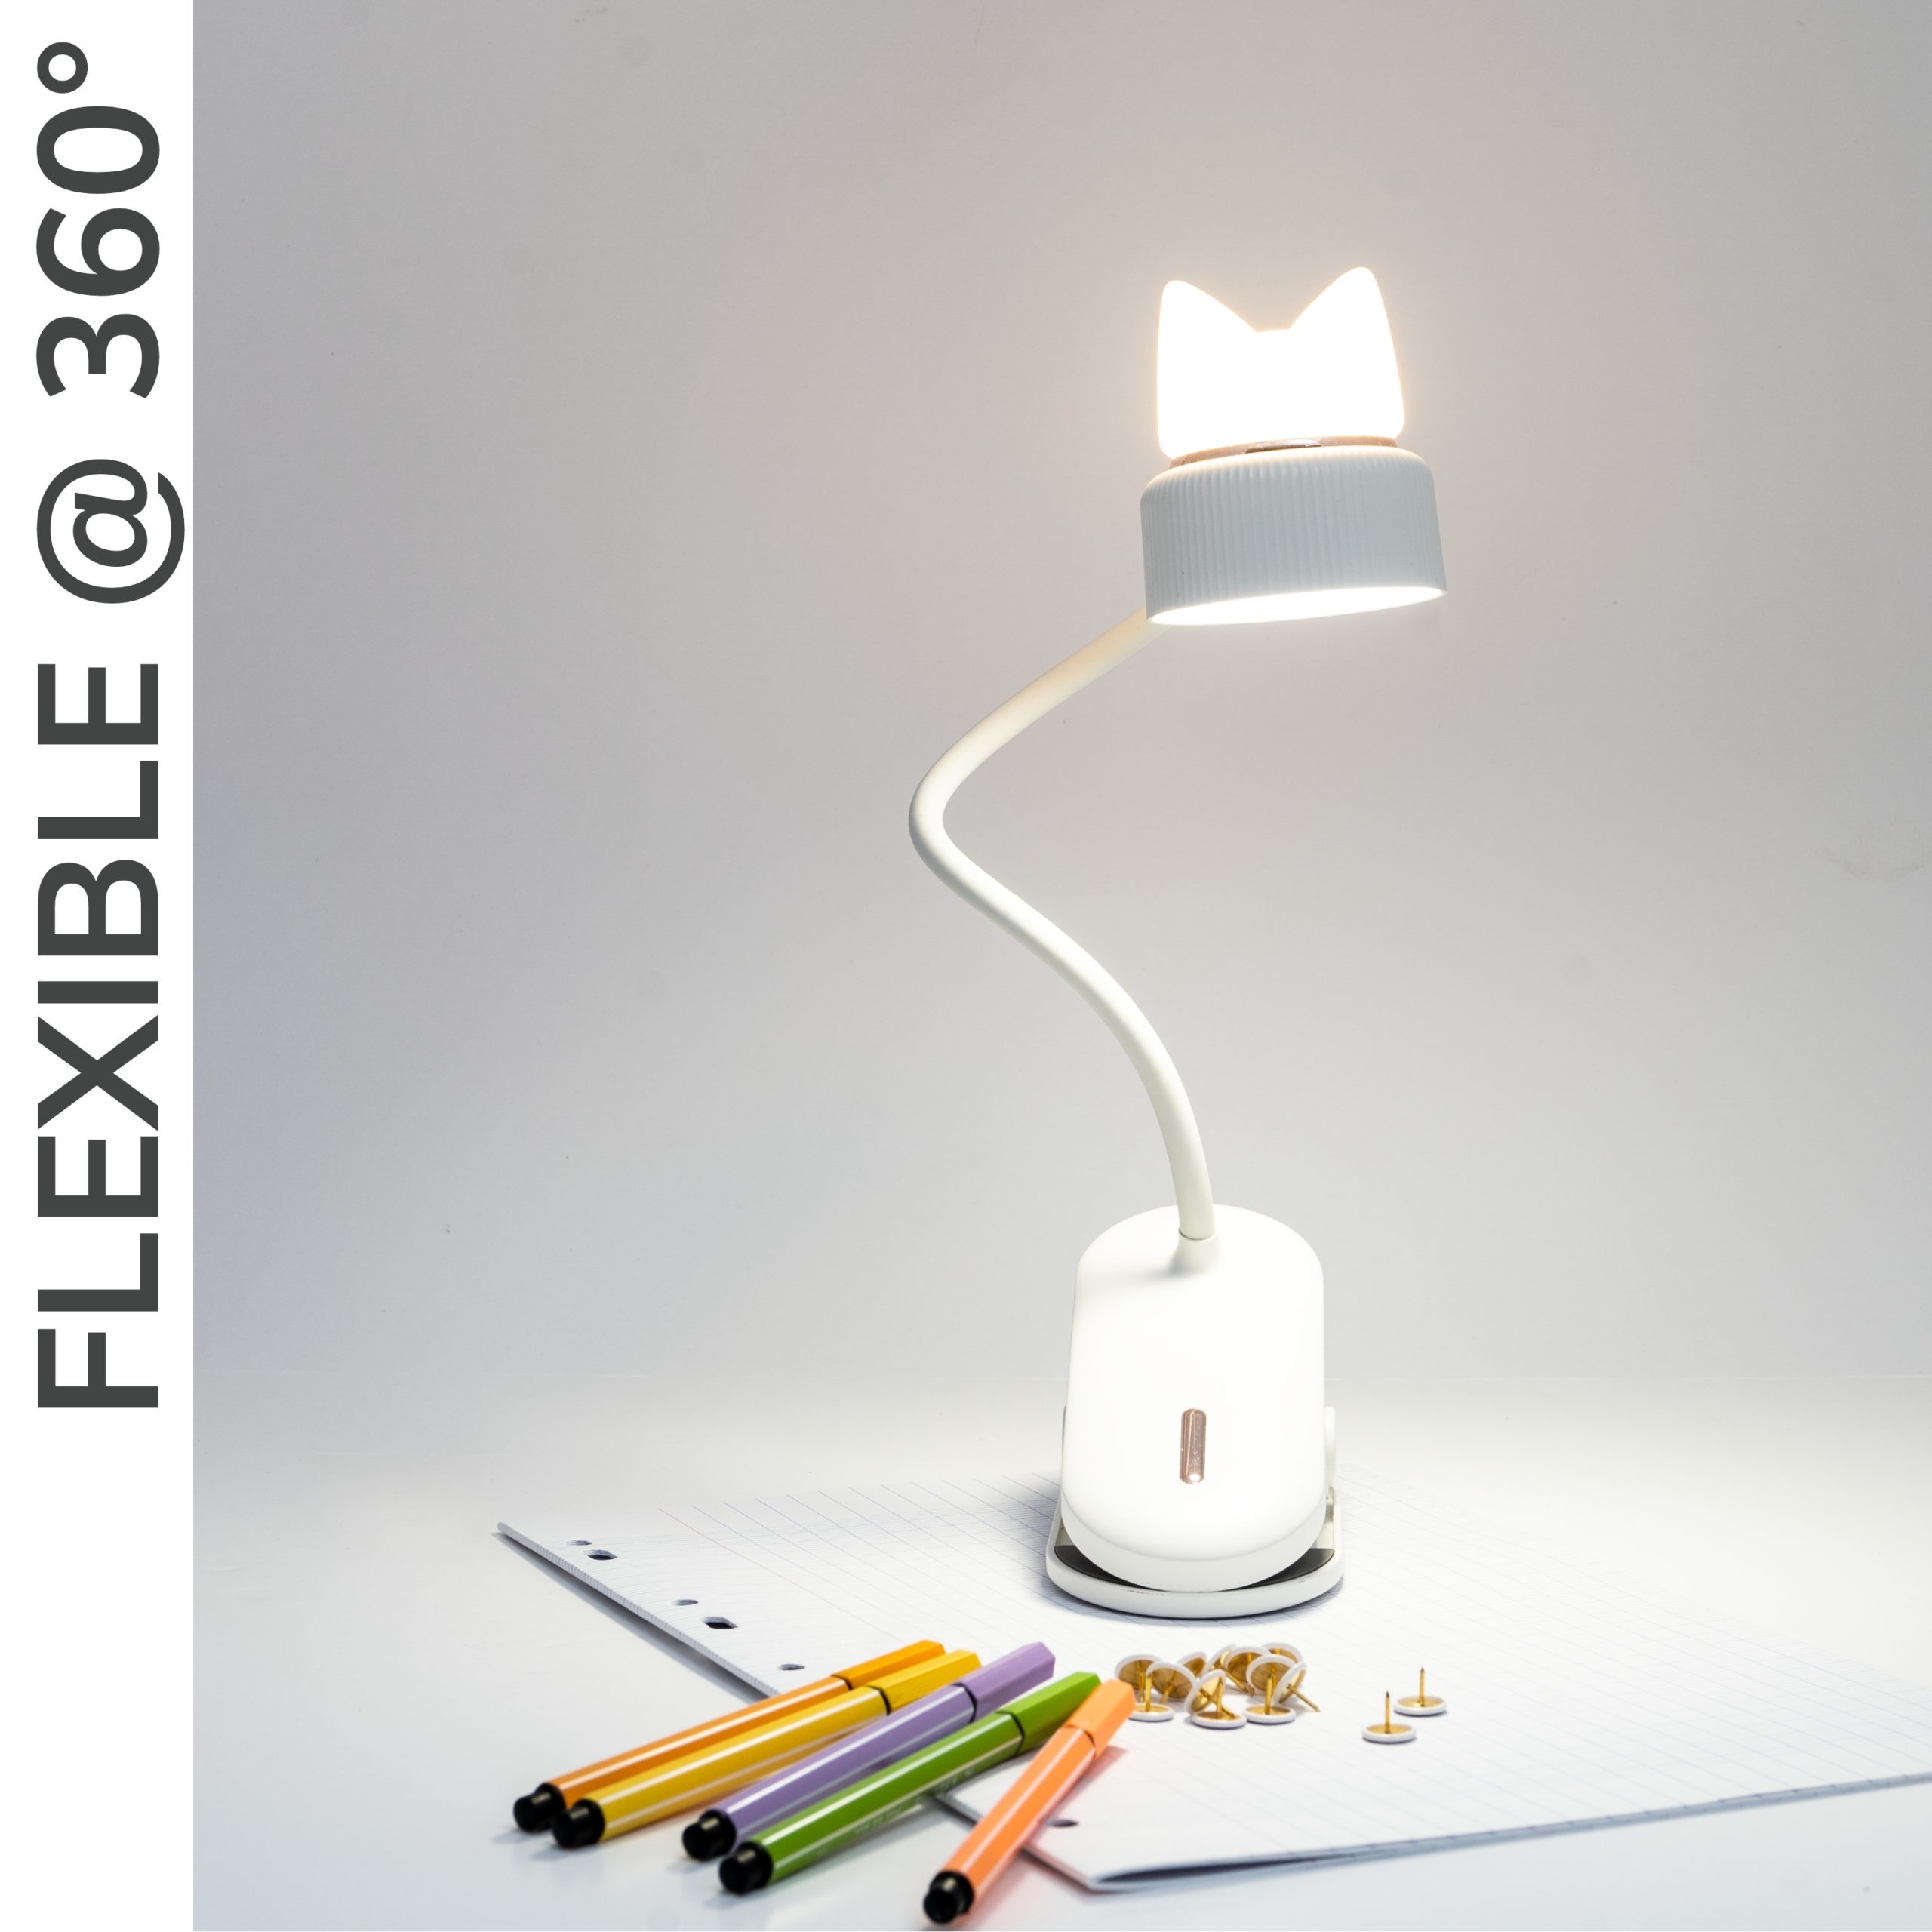 Teckin - Lampe de lecture Teckin DL01, Lampe à pince, Lampe de